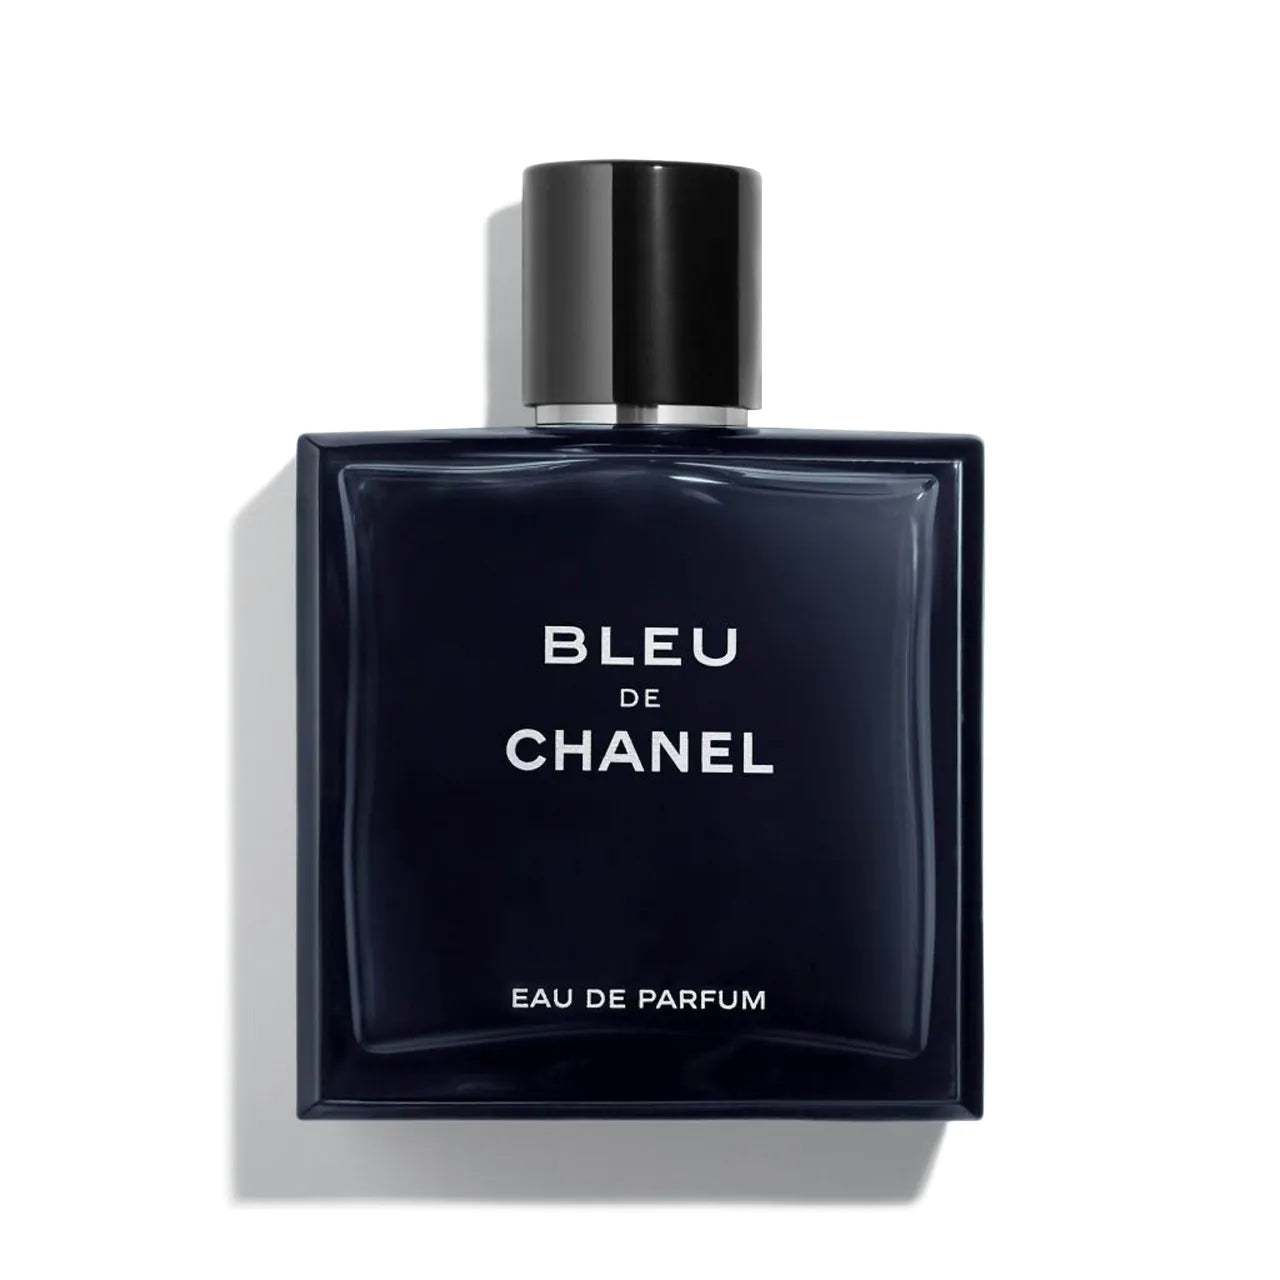 Chanel Bleu By Chanel For Men 5.0 oz Eau de Parfum Spray